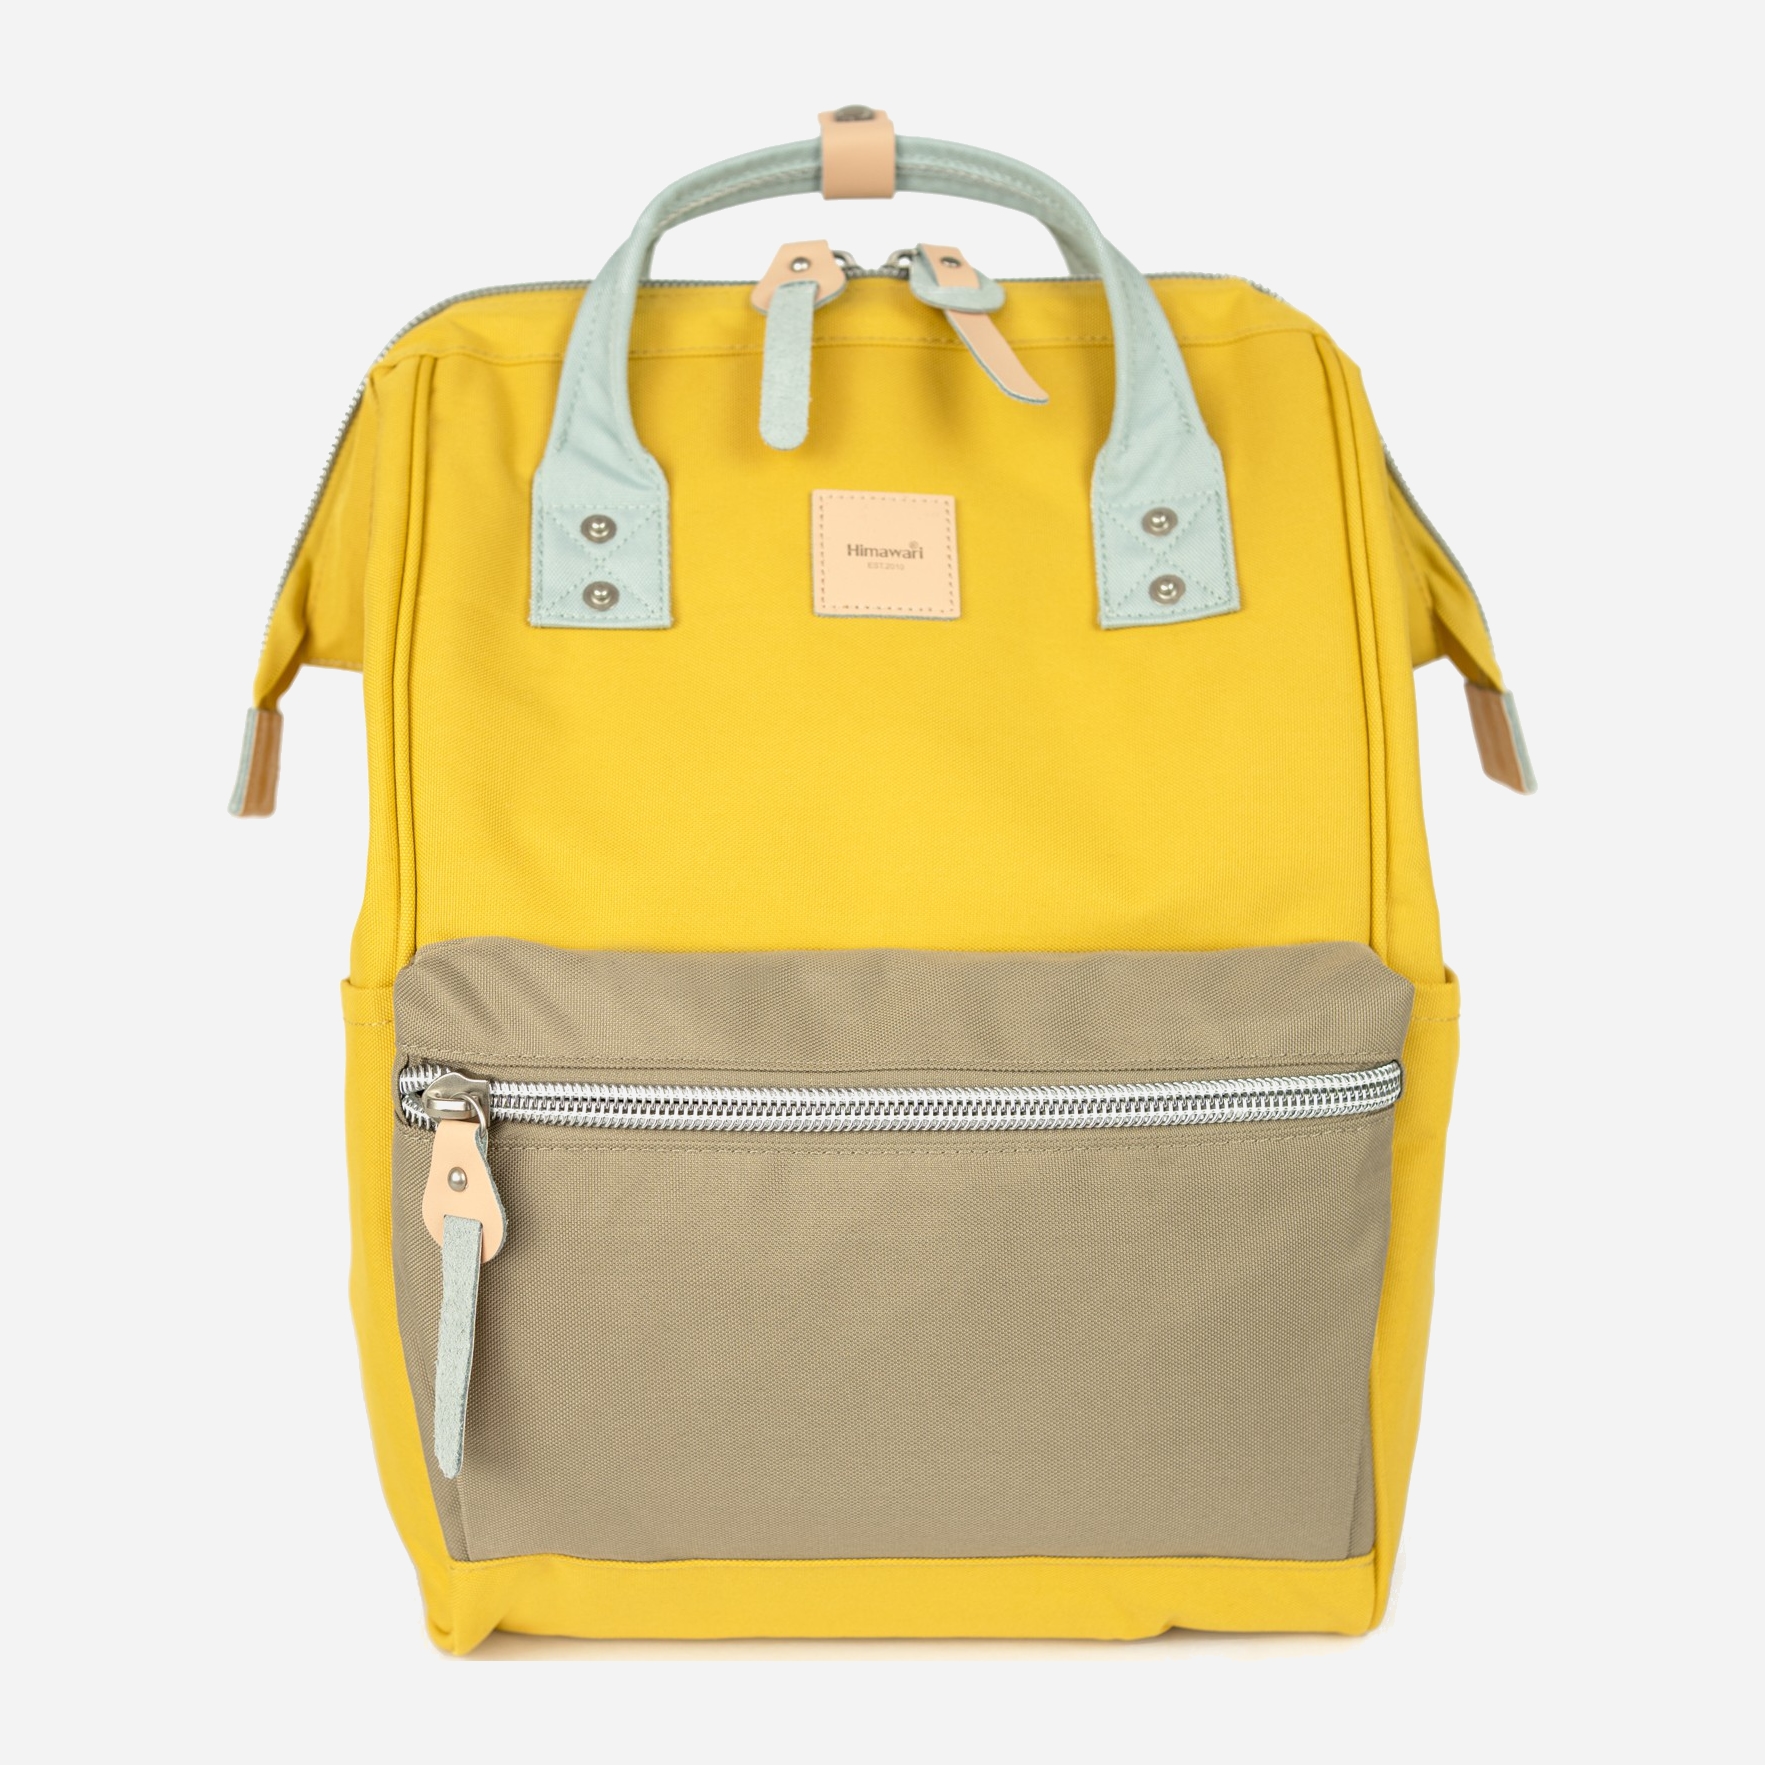 Акция на Жіночий рюкзак Himawari Tr23185-3 Темно-бежевий/Жовтий от Rozetka